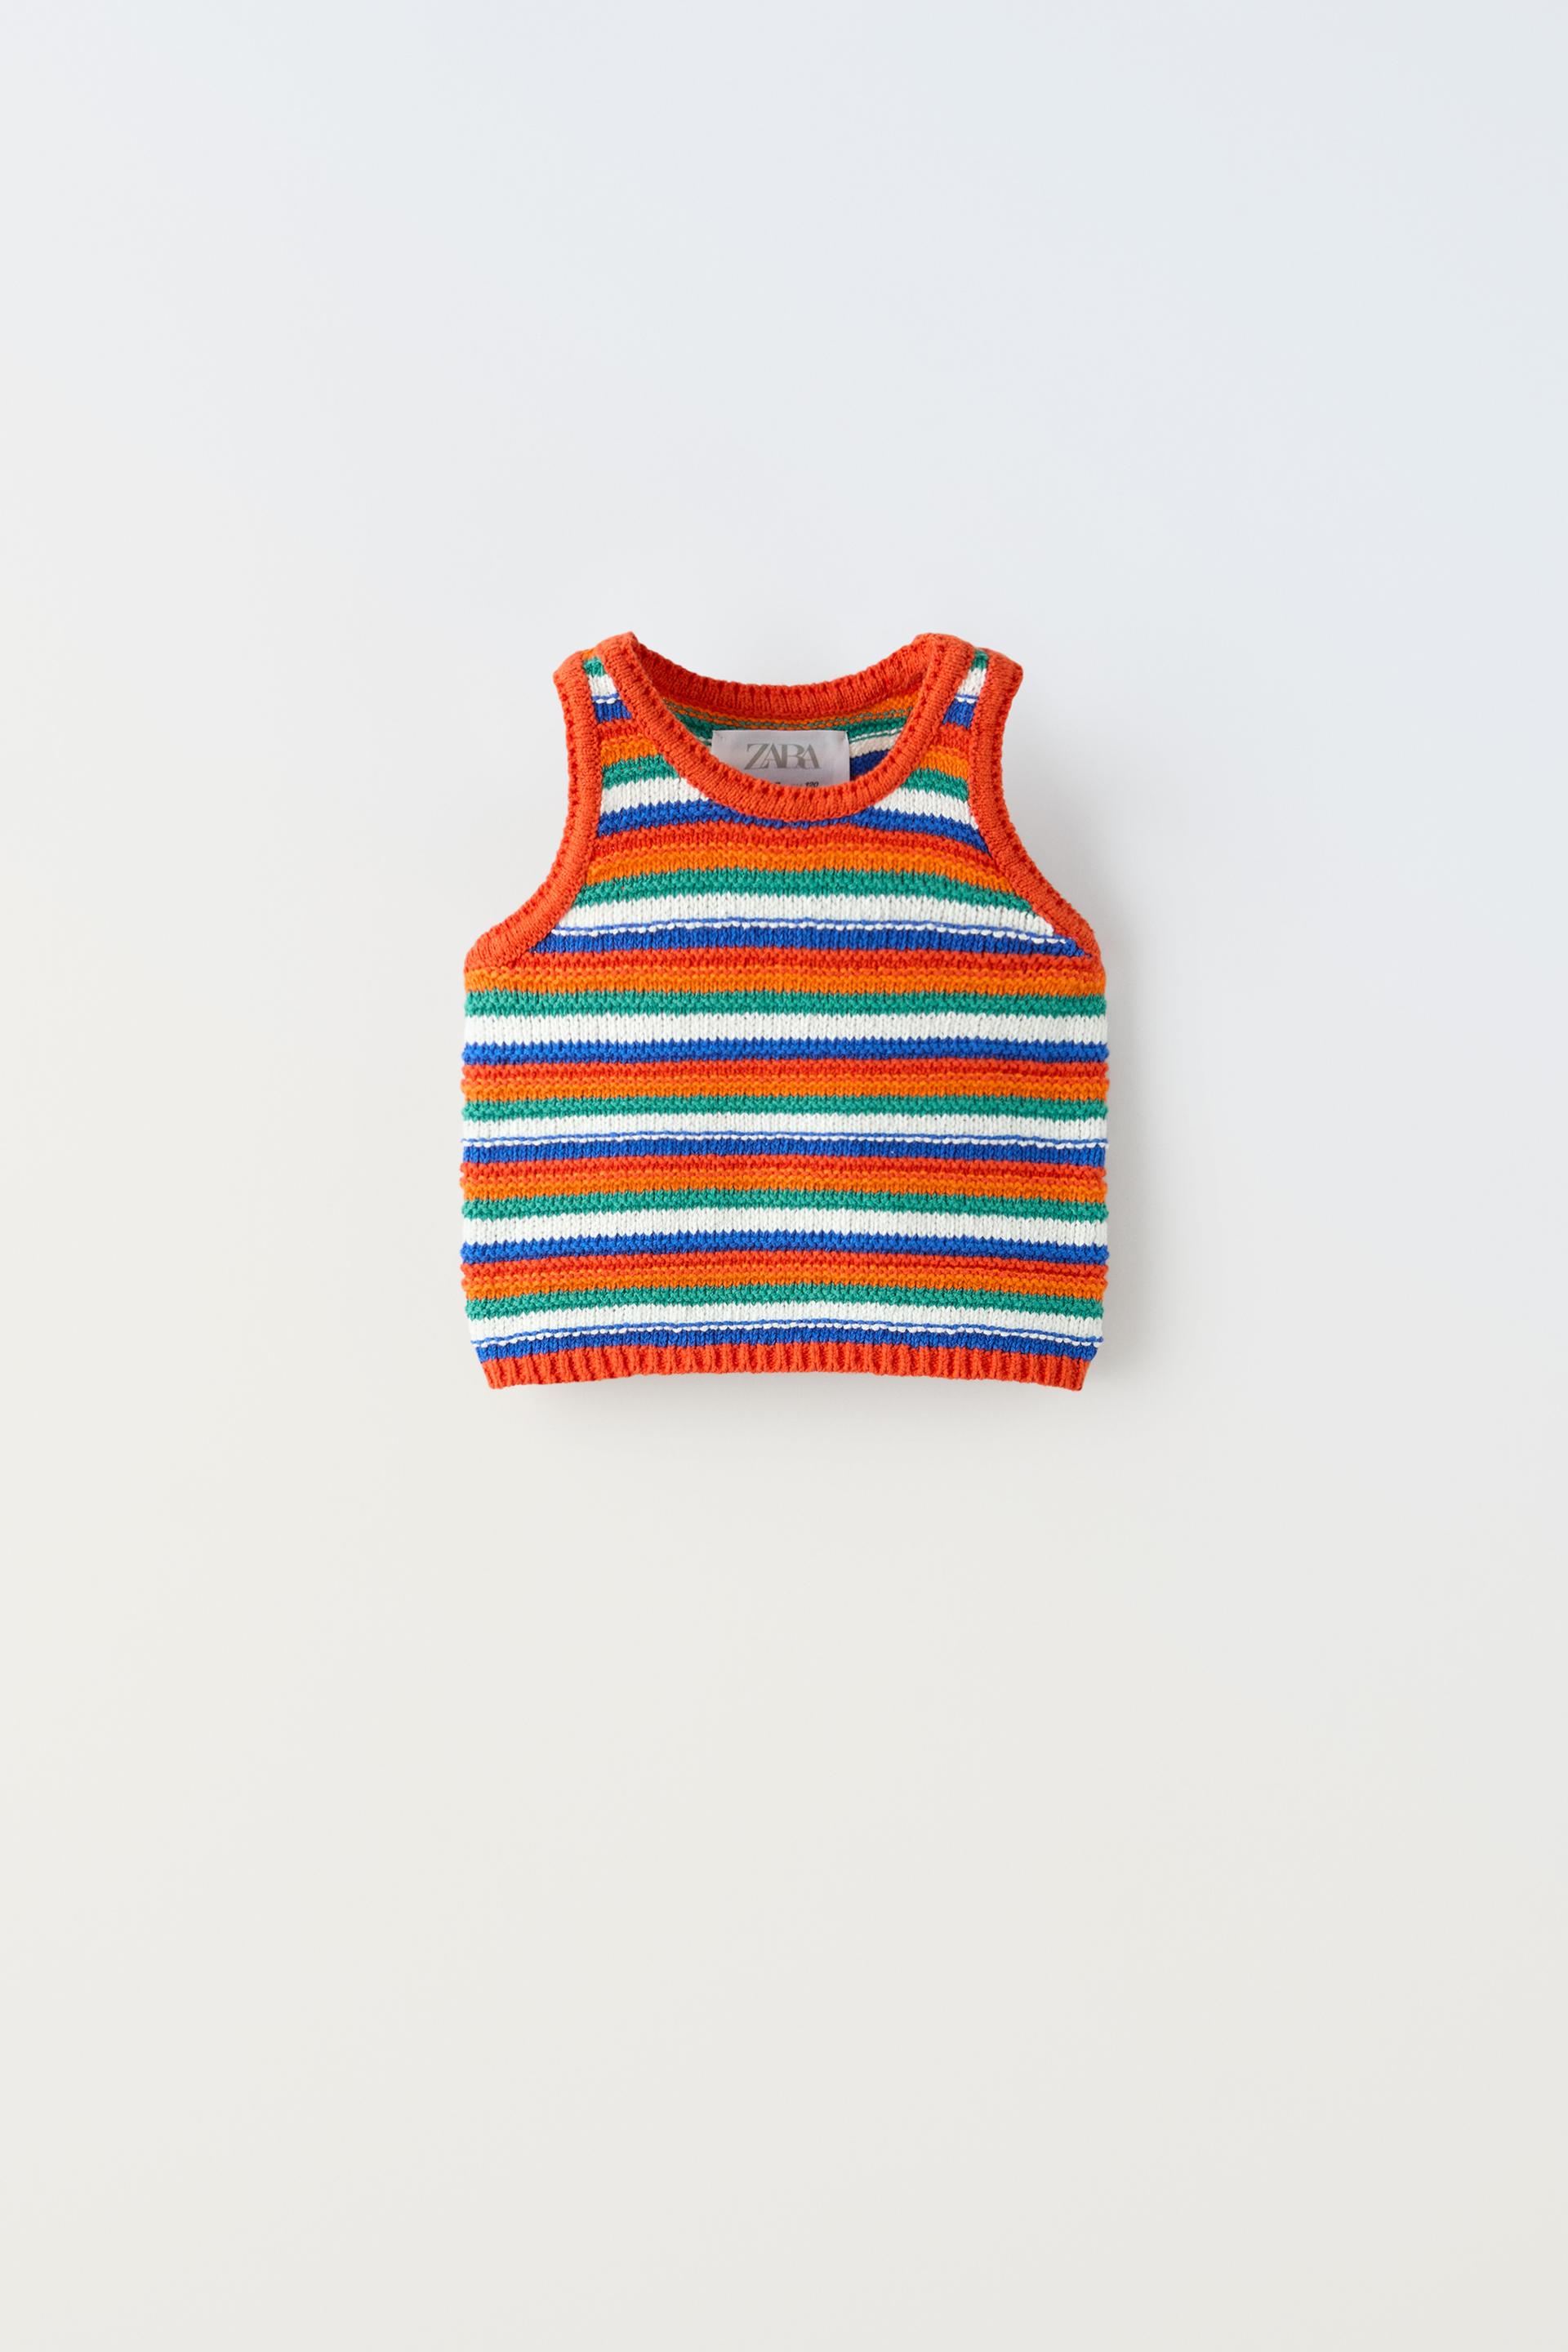 Топ Zara Striped Knit, разноцветный